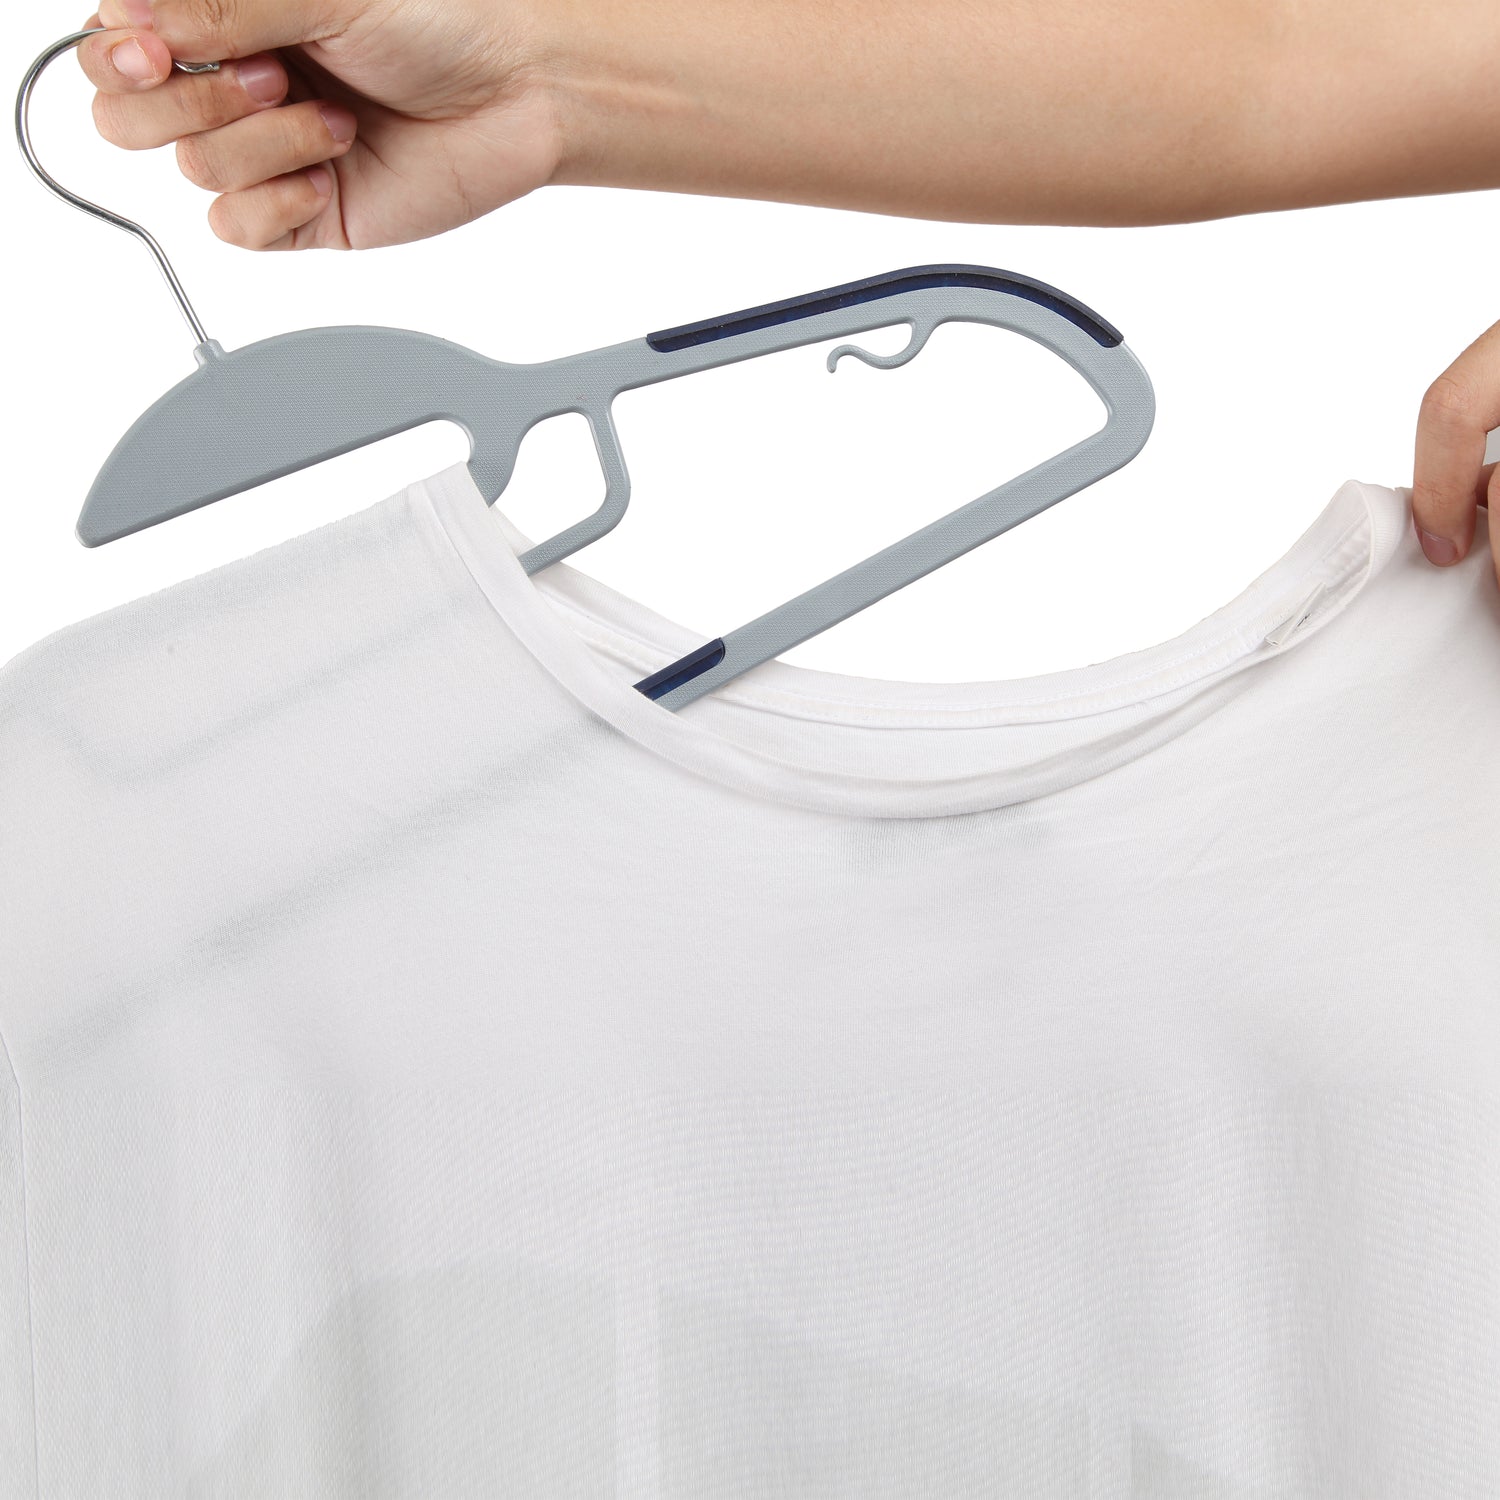 Wish & Buy - Heavy Duty Slim Clear Hangers - Ridged Non-Slip